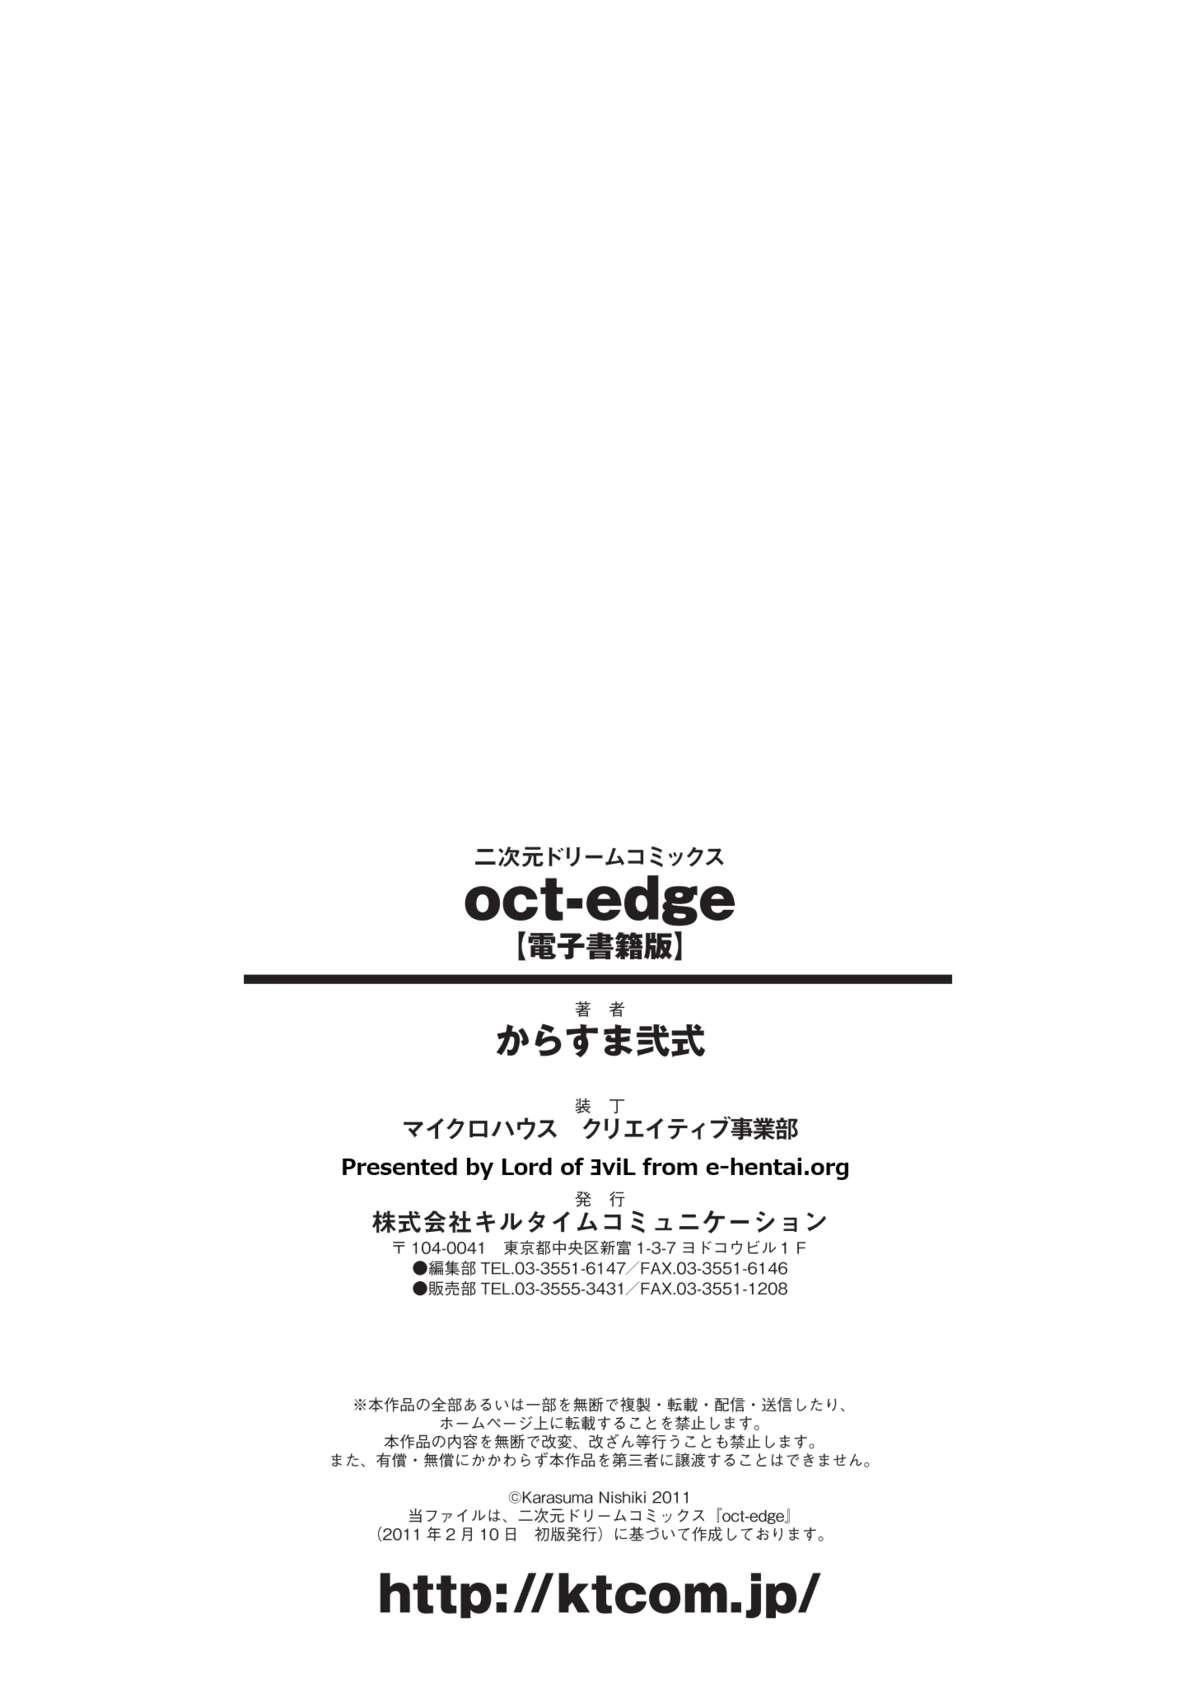 oct-edge 174